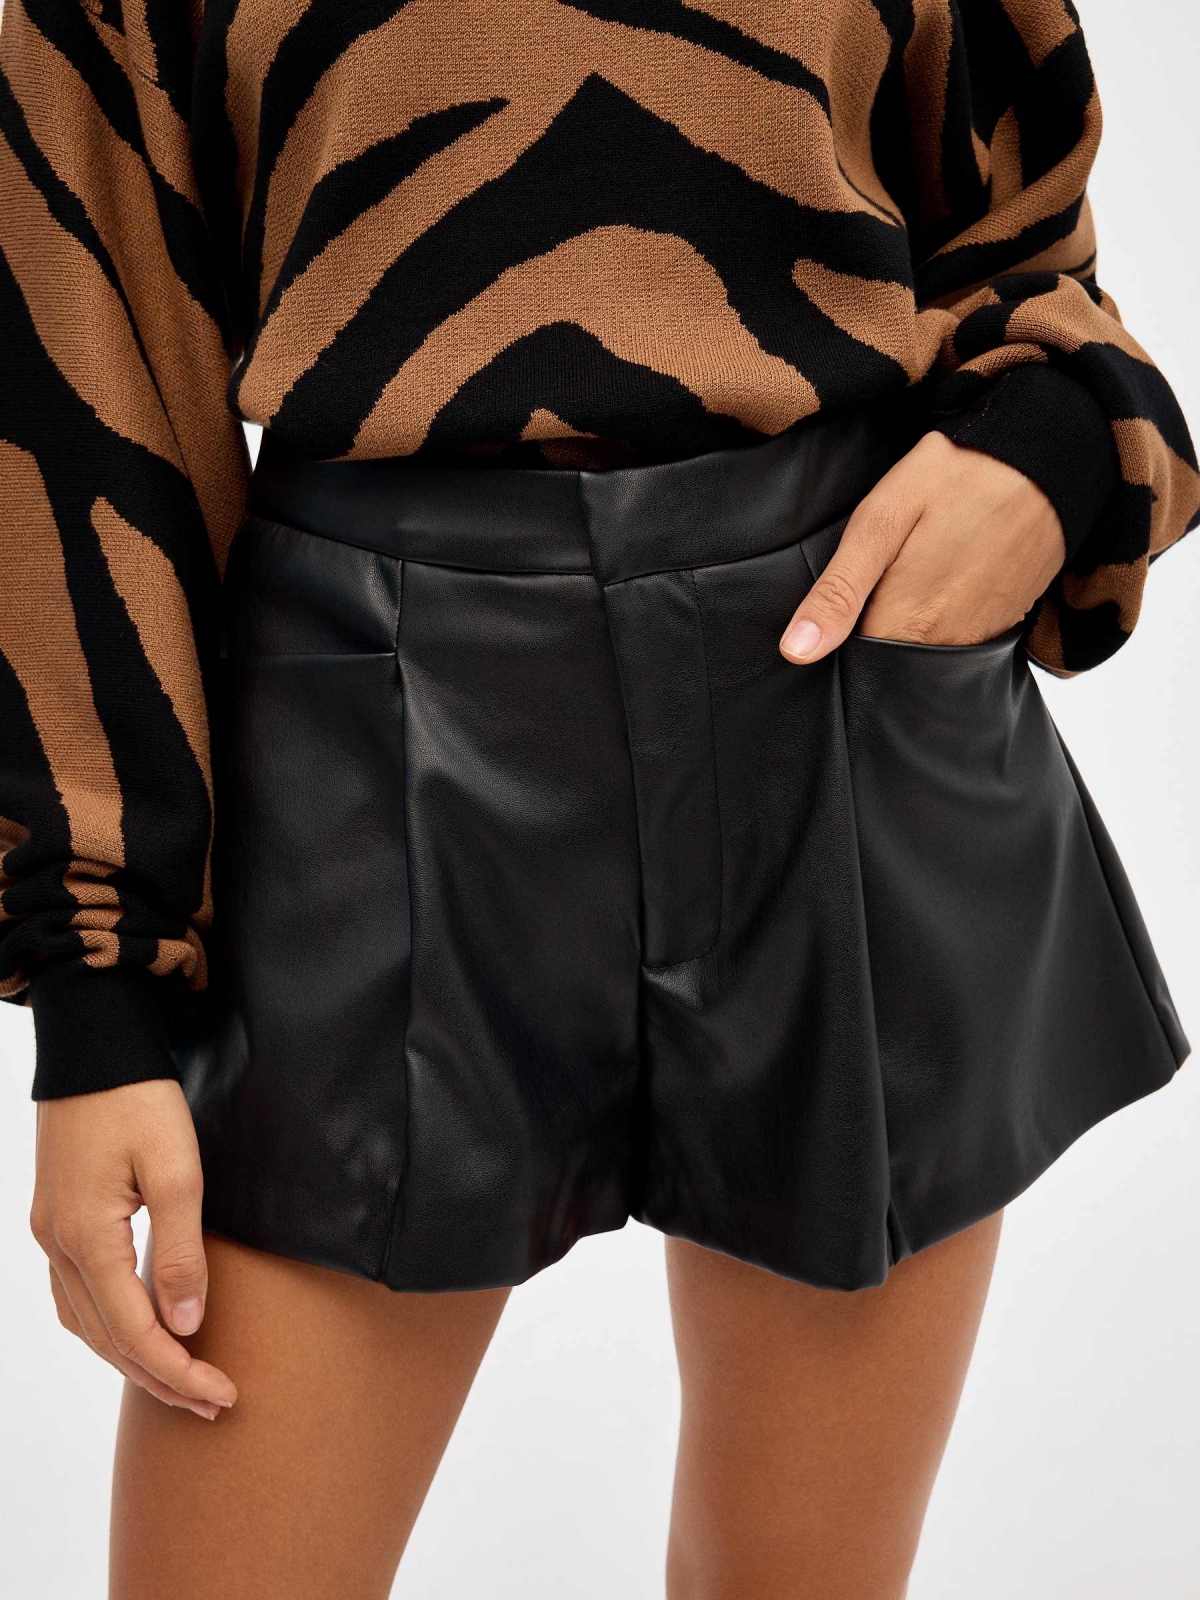 Leatherette slim shorts black detail view